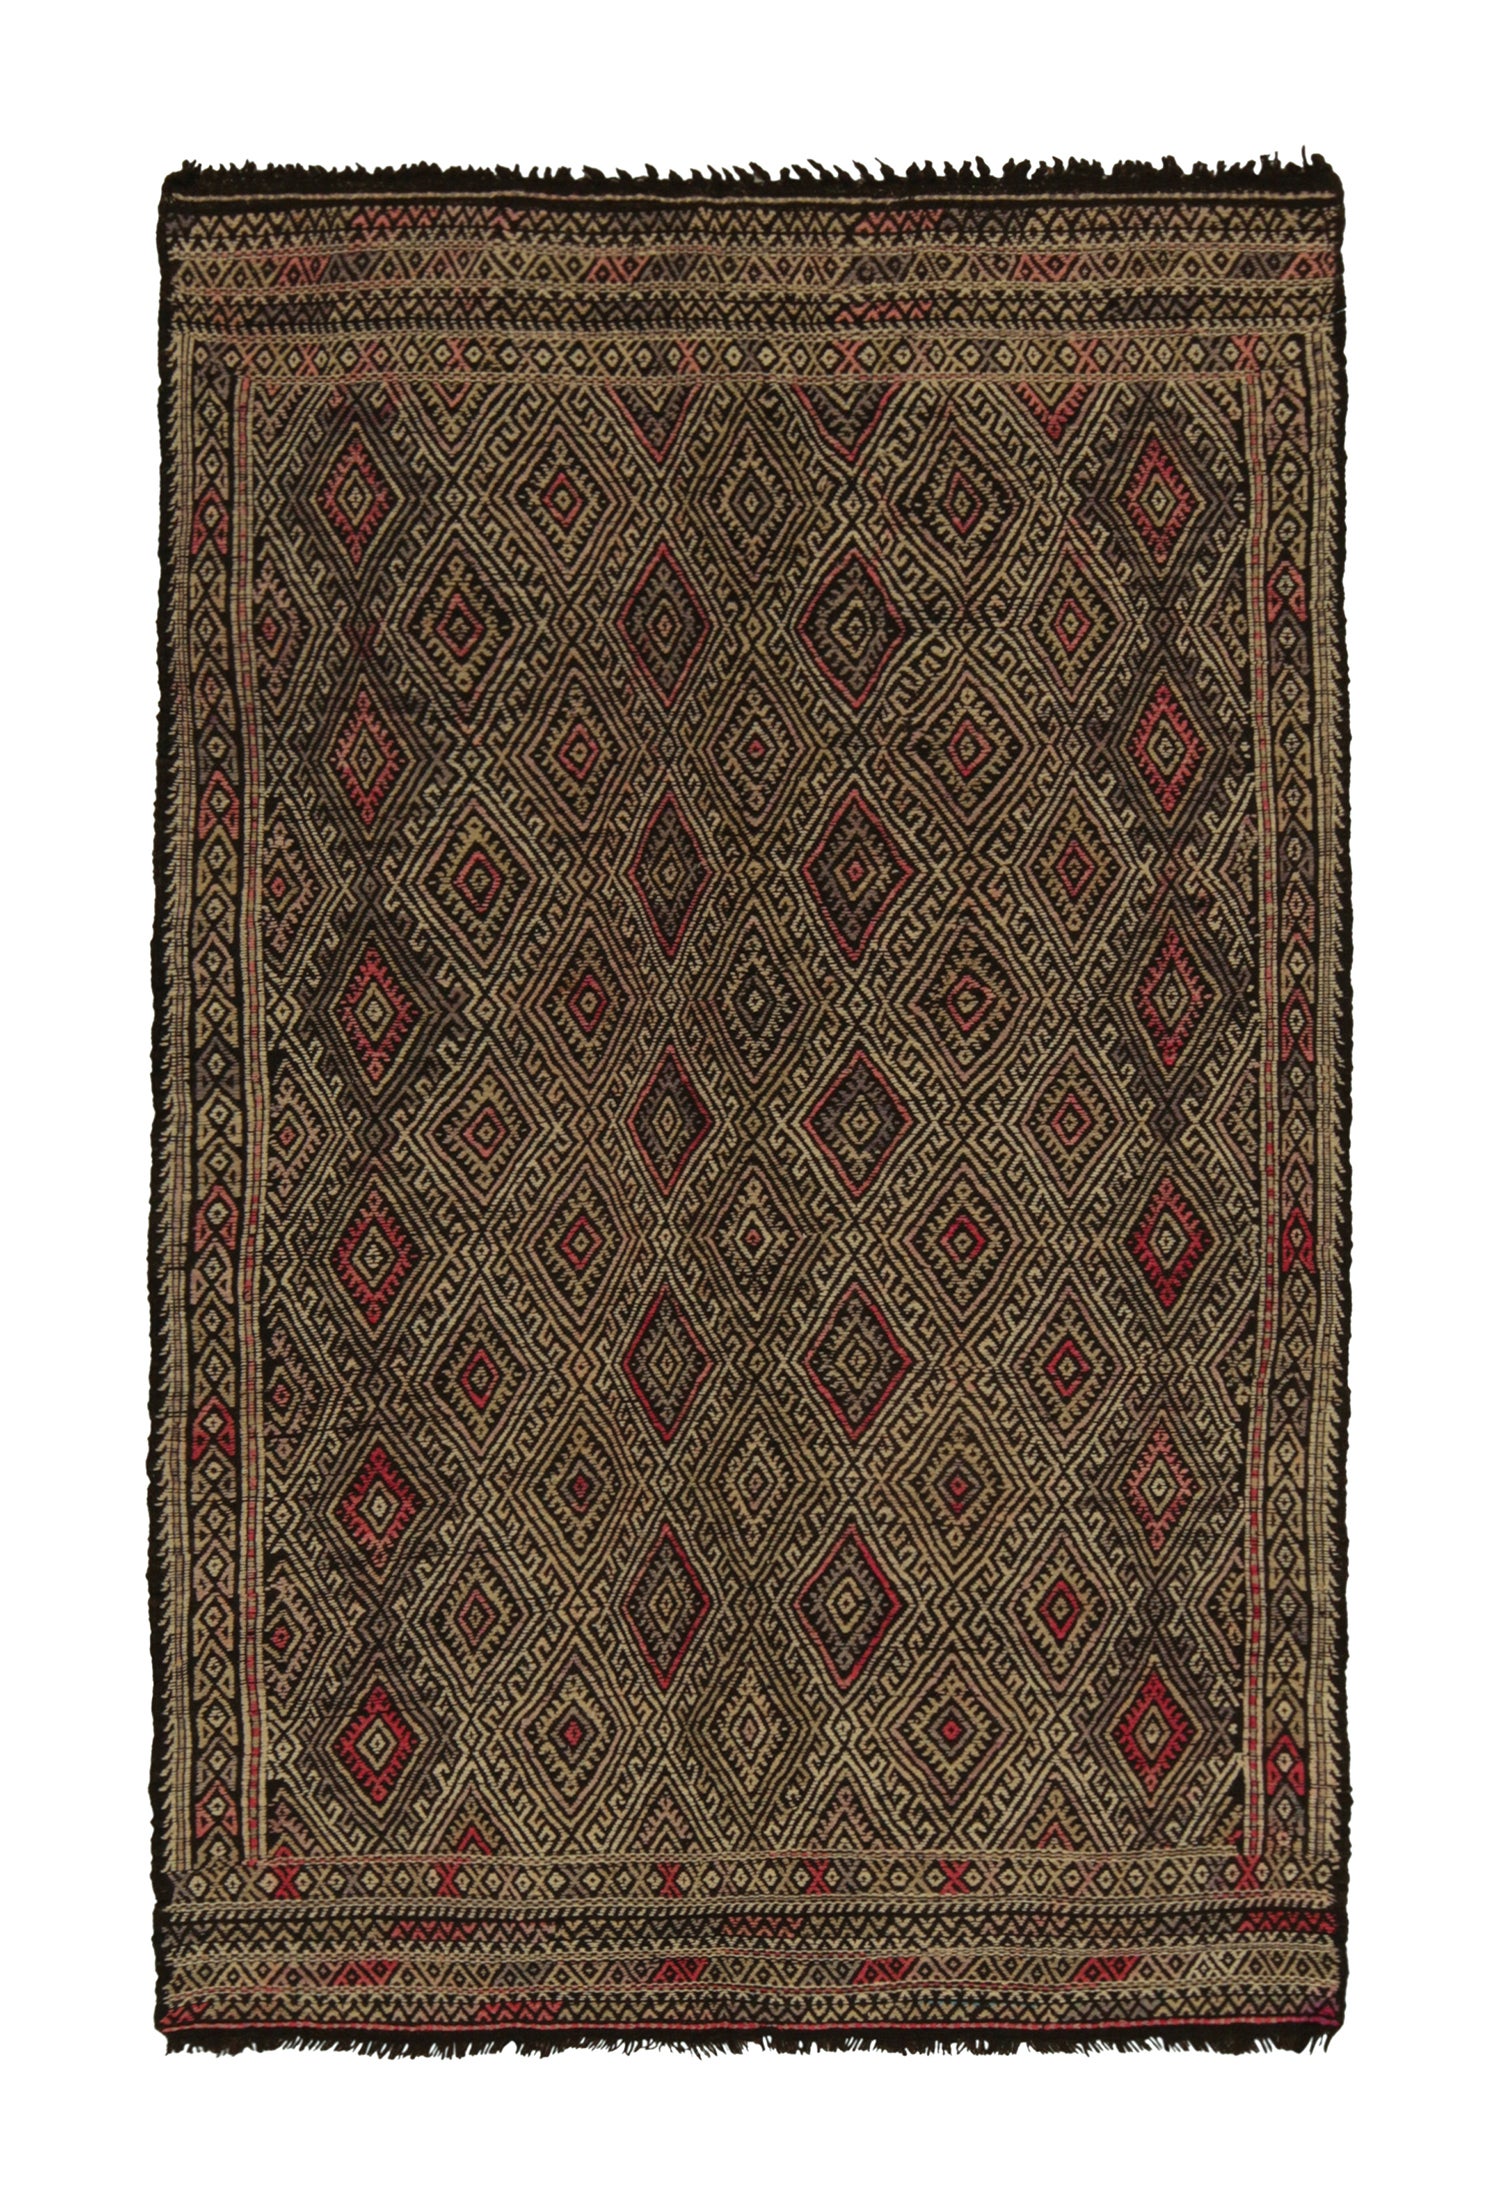 Vintage Chaput Tribal Kilim Beige-Brown and Red Diamond Pattern by Rug & Kilim For Sale